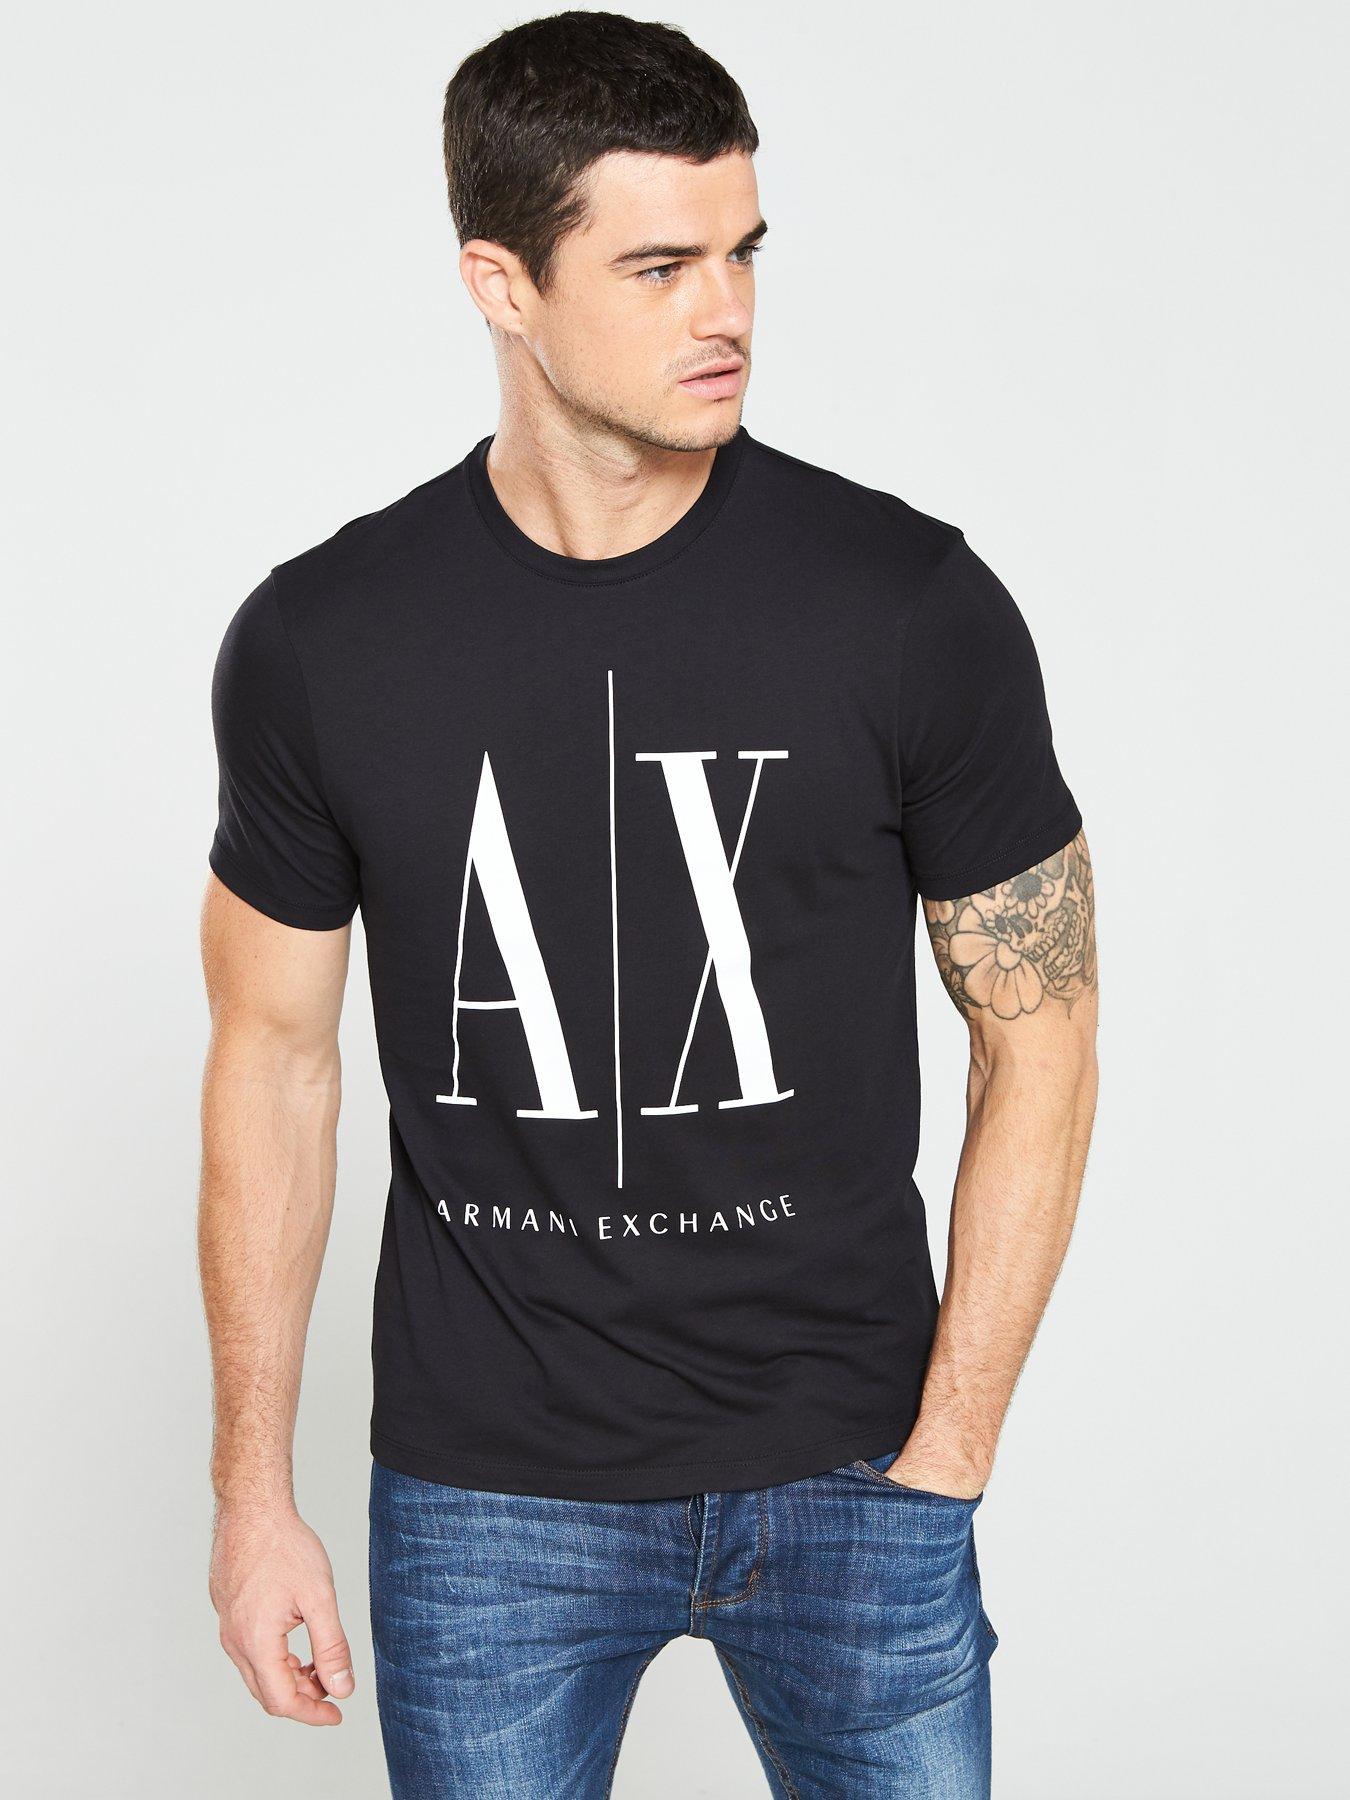 armani exchange shirt for men